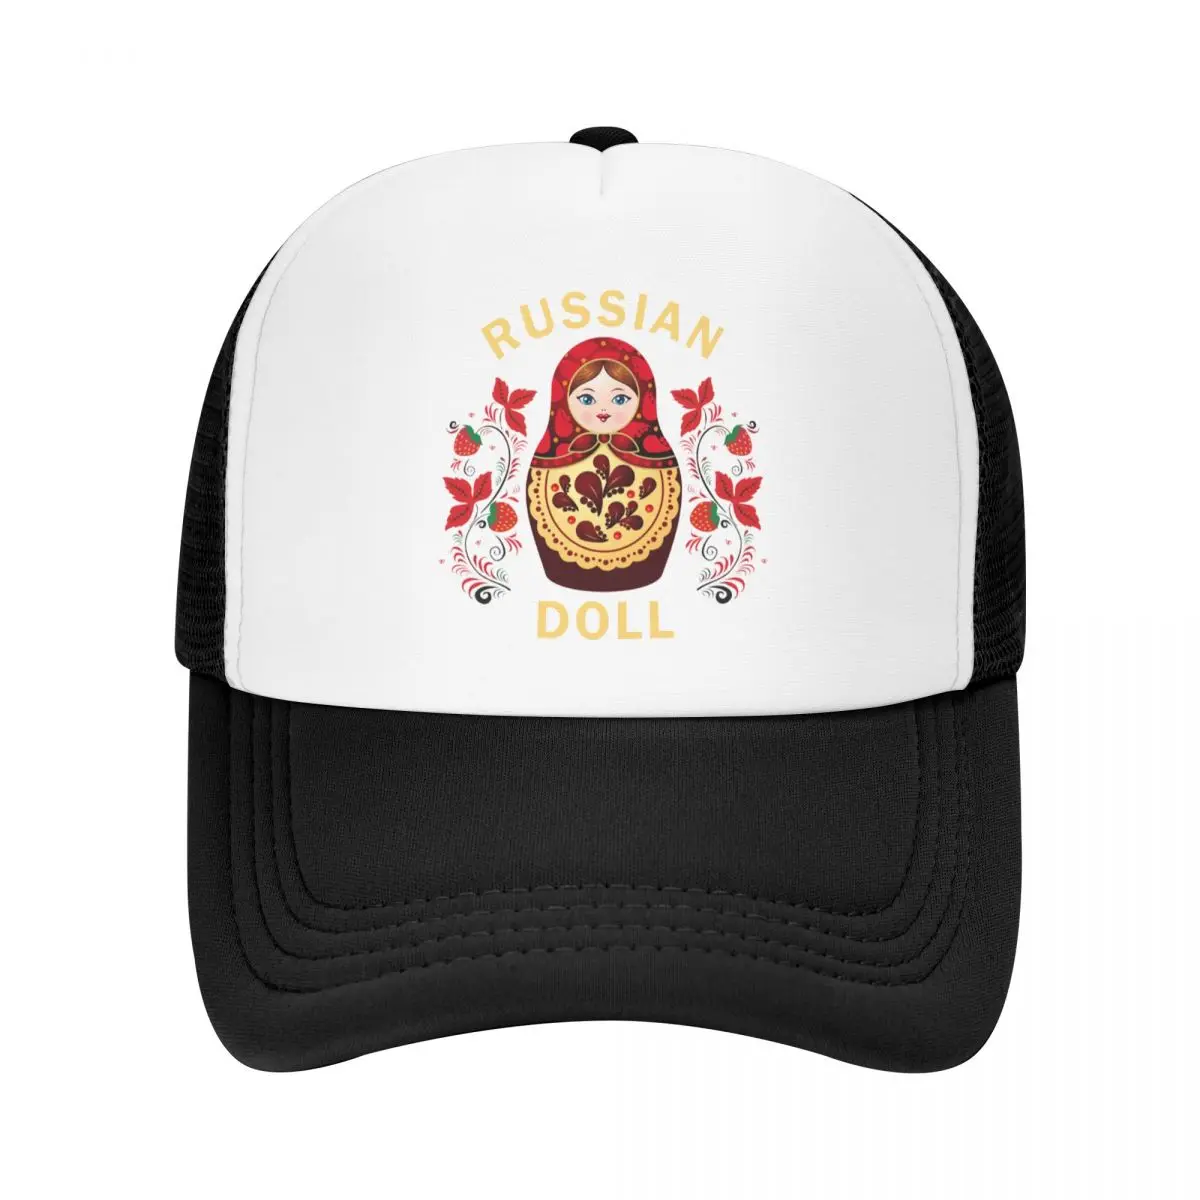 Fashion Babushka Matryoshka Russian Doll Baseball Cap Women Men Adjustable Trucker Hat Sports Snapback Hats Summer Caps